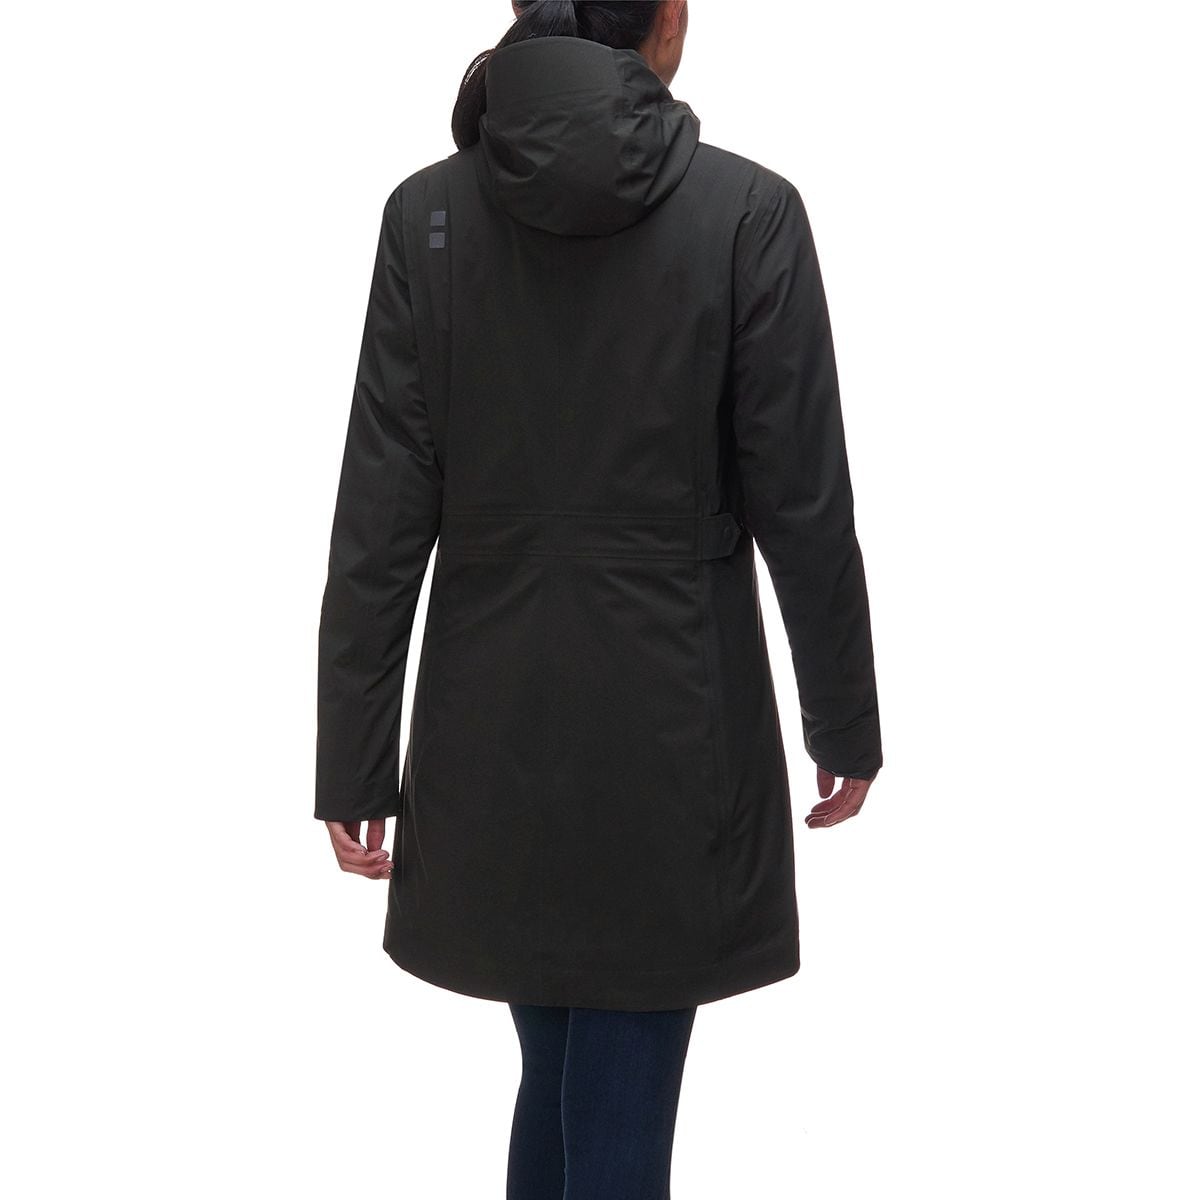 UBR Nova Insulated Coat - Women's | eBay